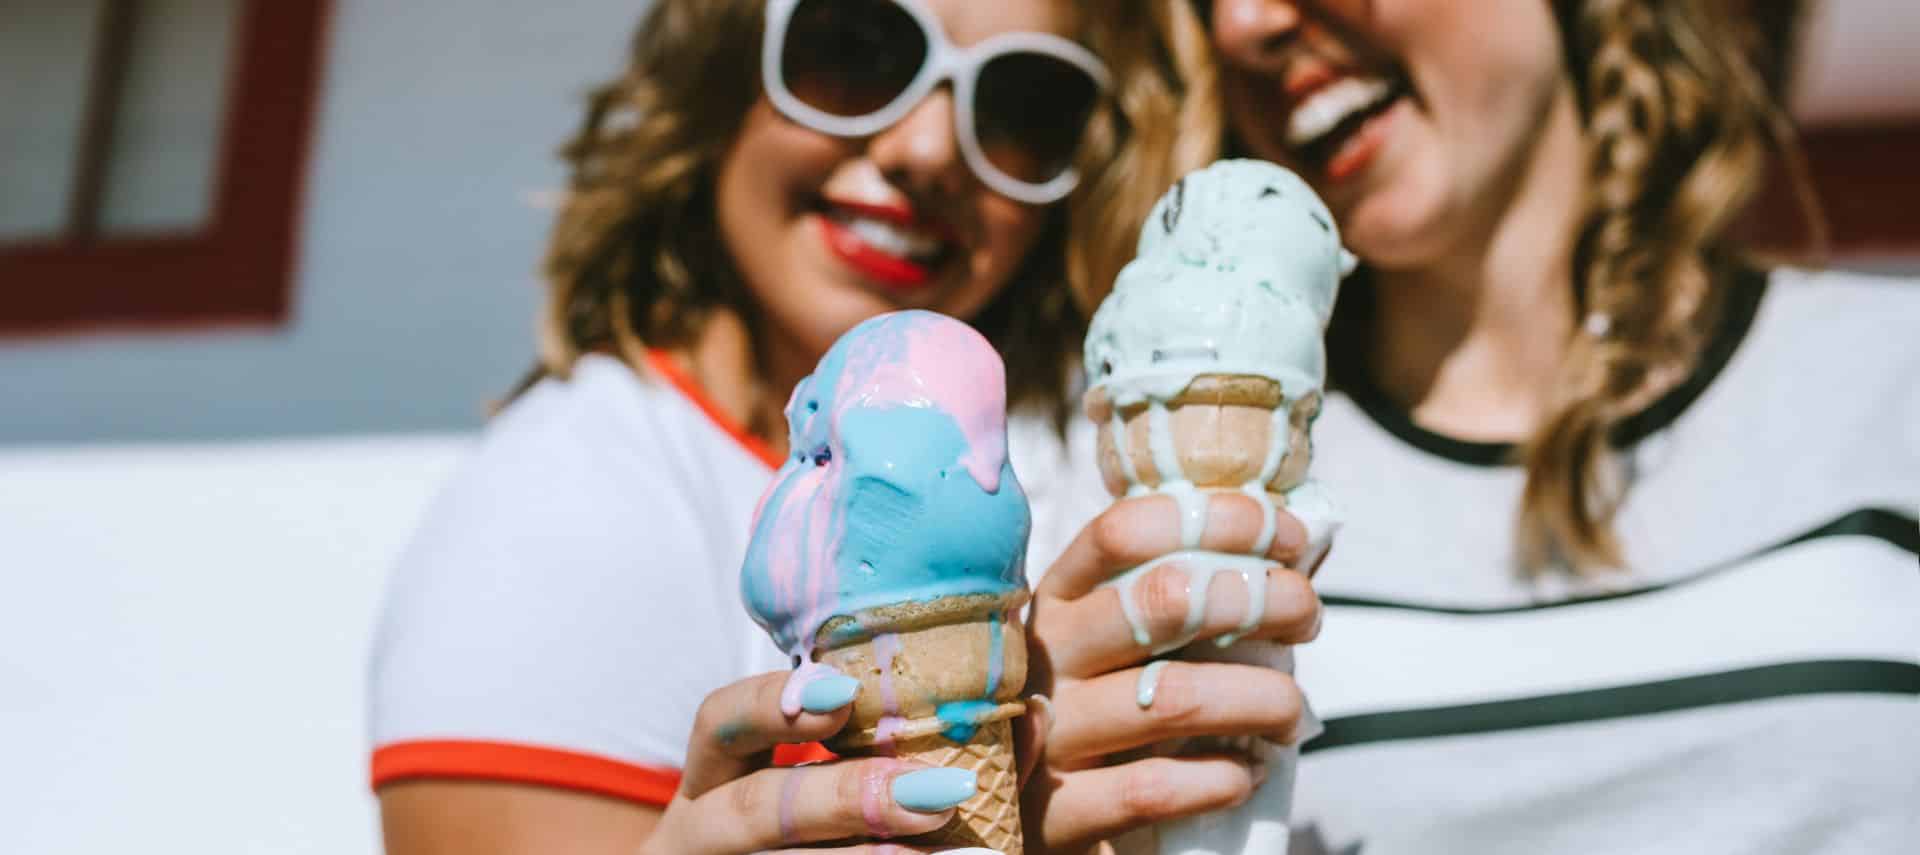 two women holding melting ice cream cones